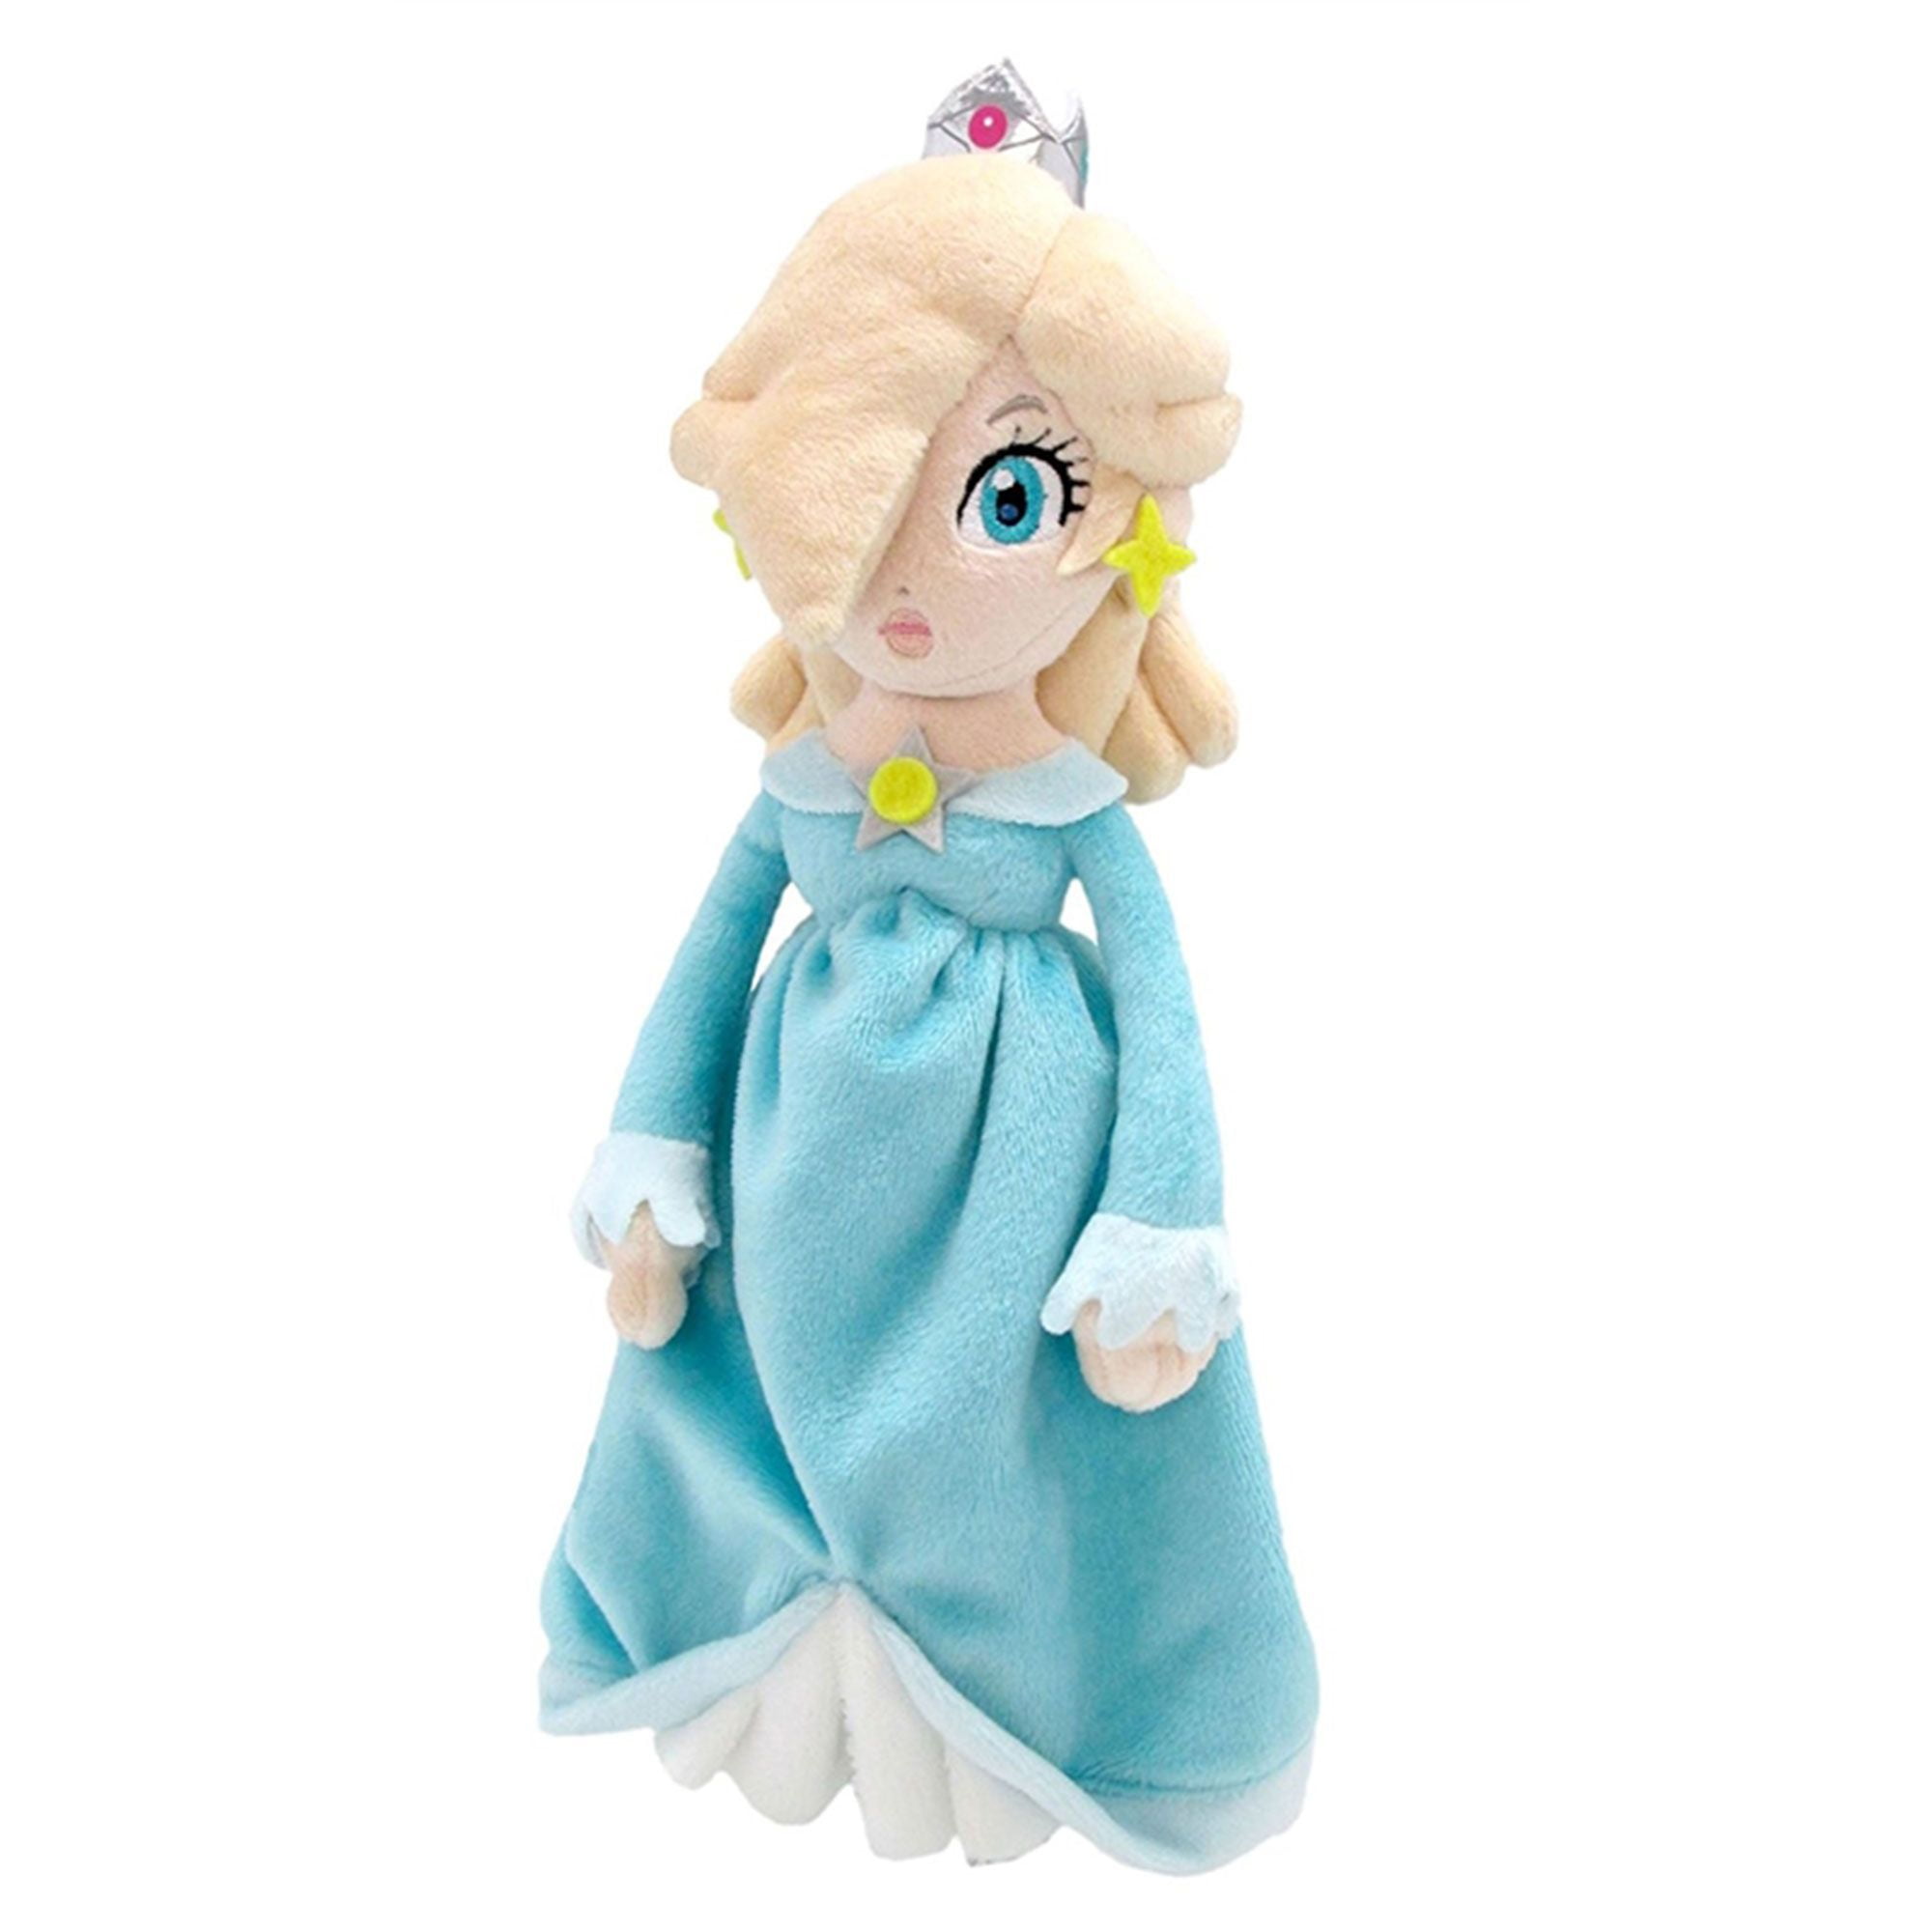 High Quality Super Mario Plush Princess Rosalina 8" Soft Cute Stuffed Toy Doll 